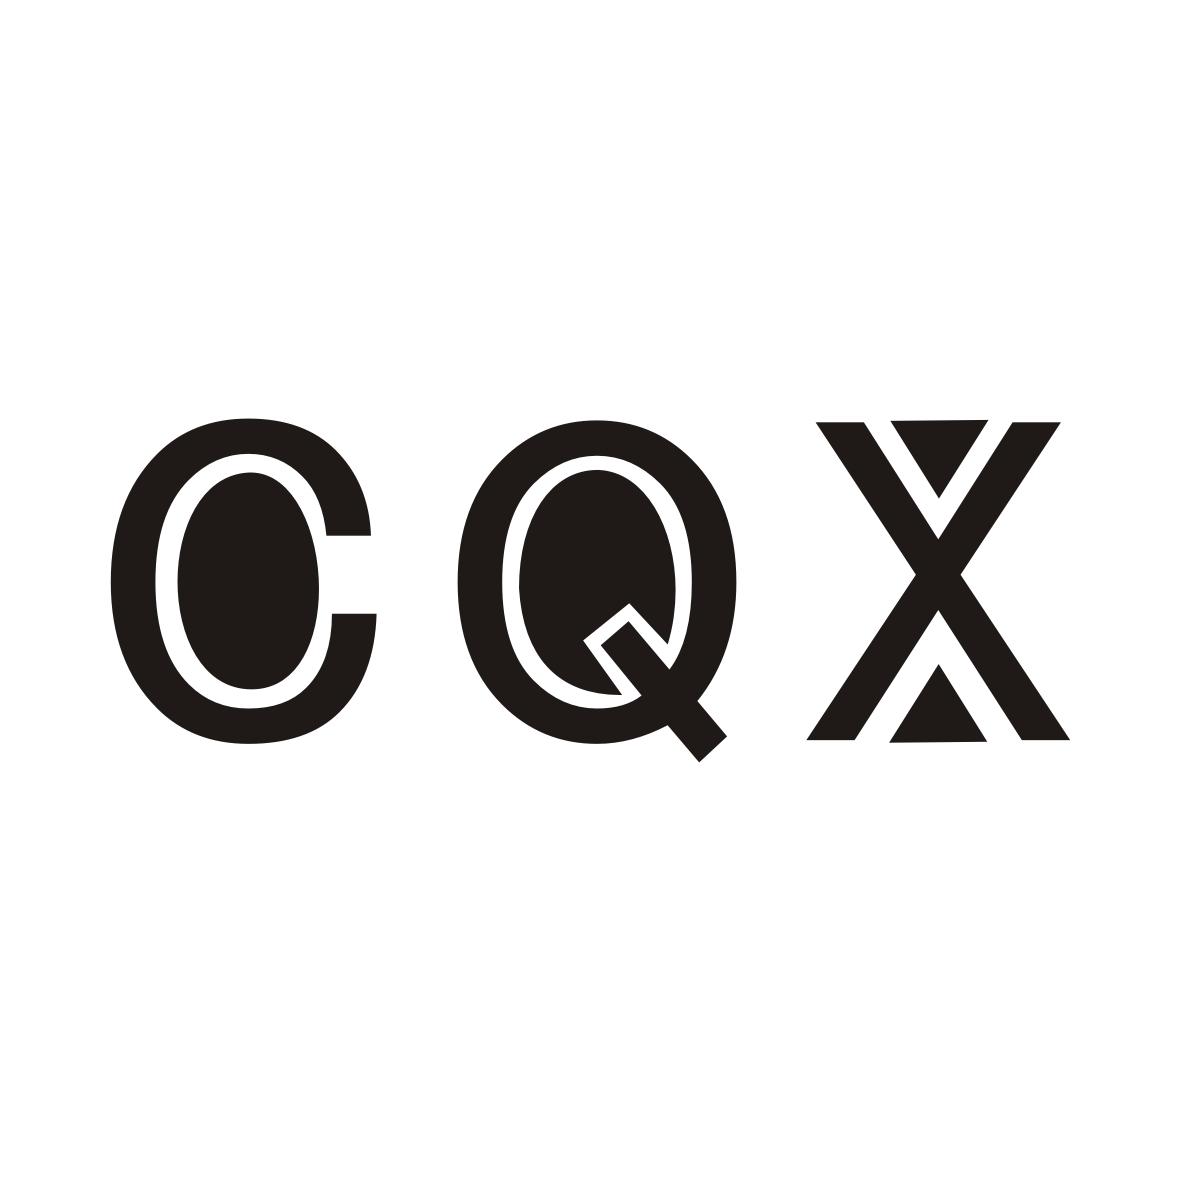 CQX